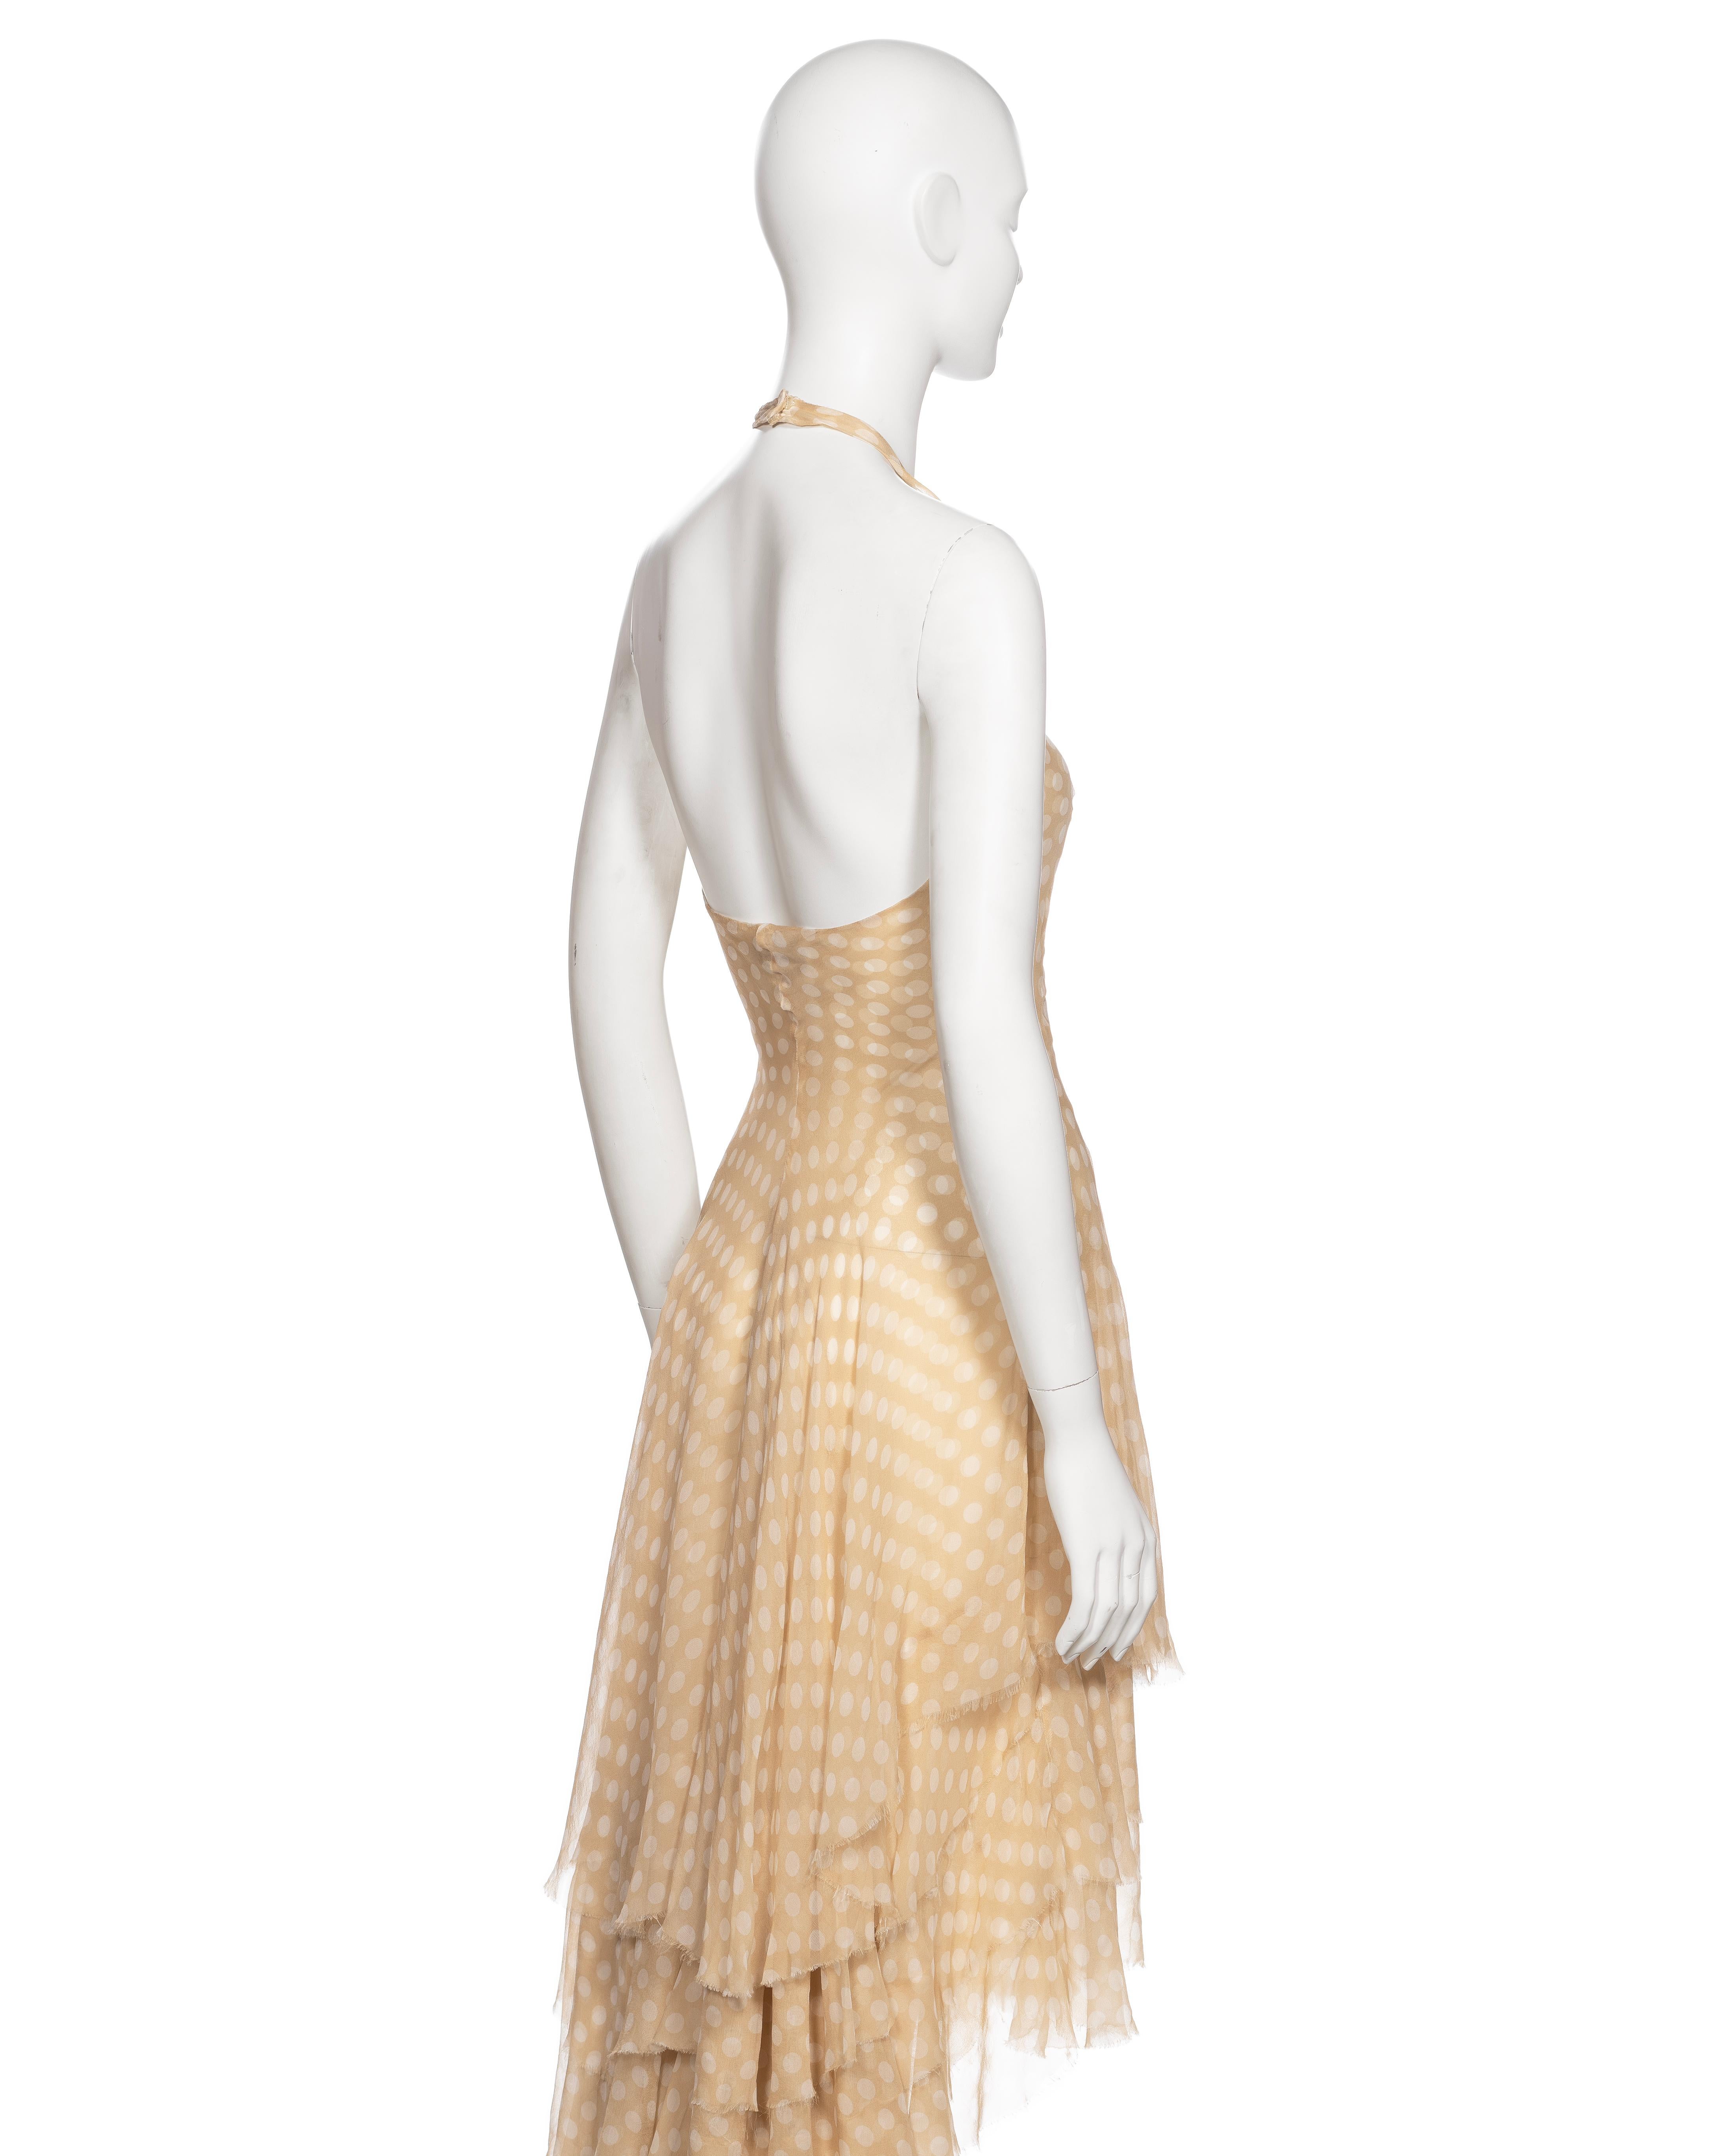 Alexander McQueen Cream Polka Dot Silk Chiffon Halter Neck Dress, SS 2002 For Sale 3